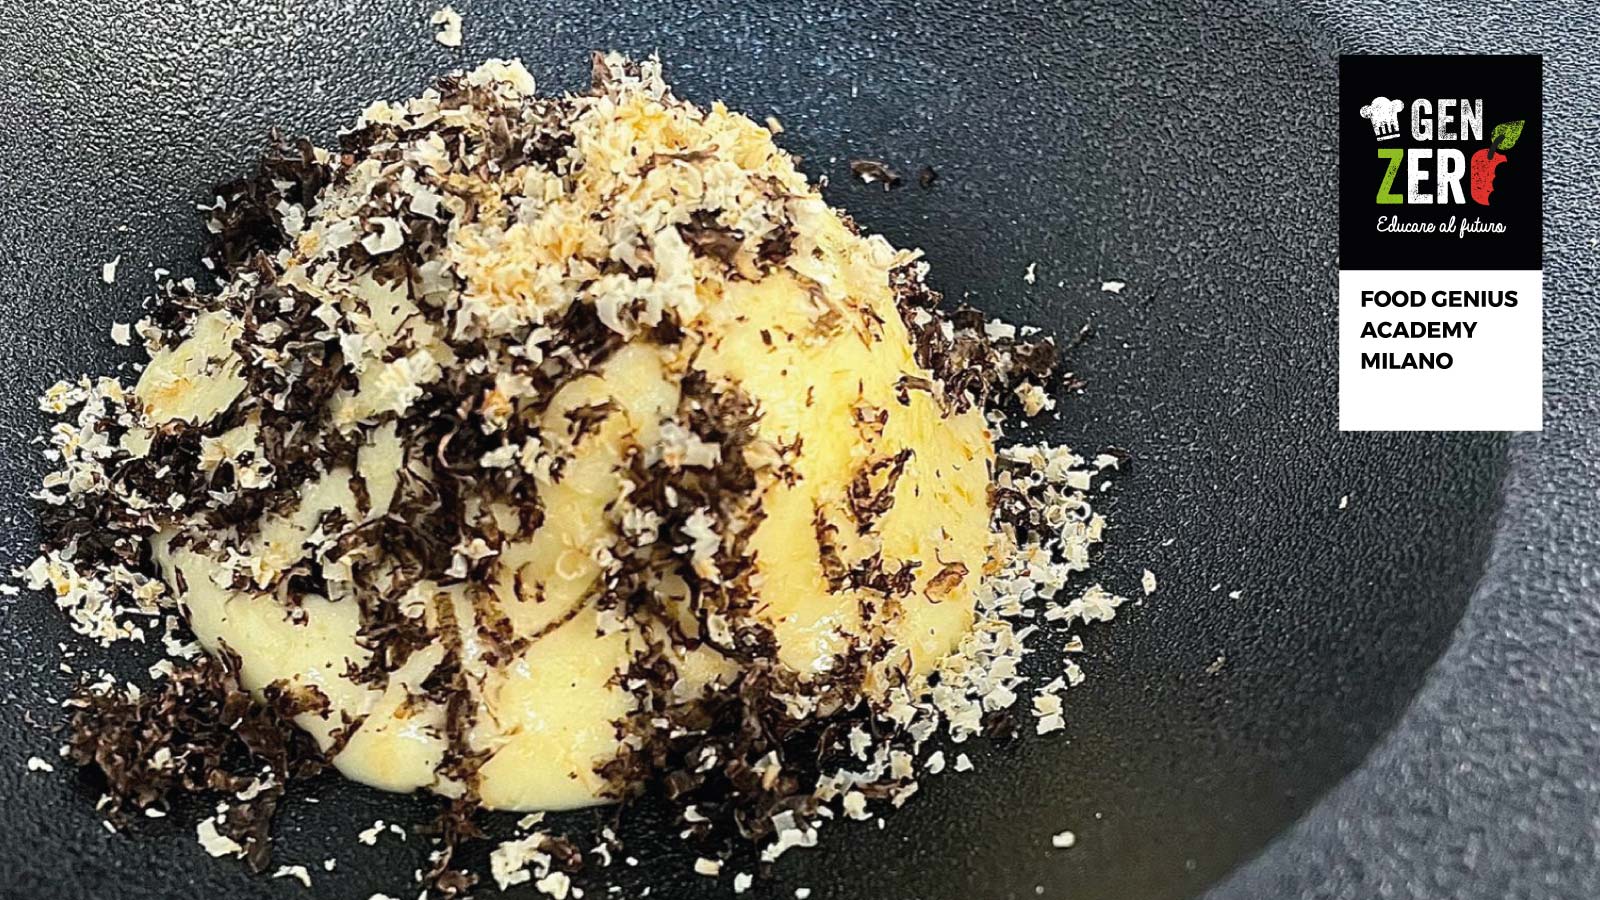 Food Genius Academy – Milano Soft Egg, Potato Mousse, Potato Peel Powder, Hazelnuts And Truffle